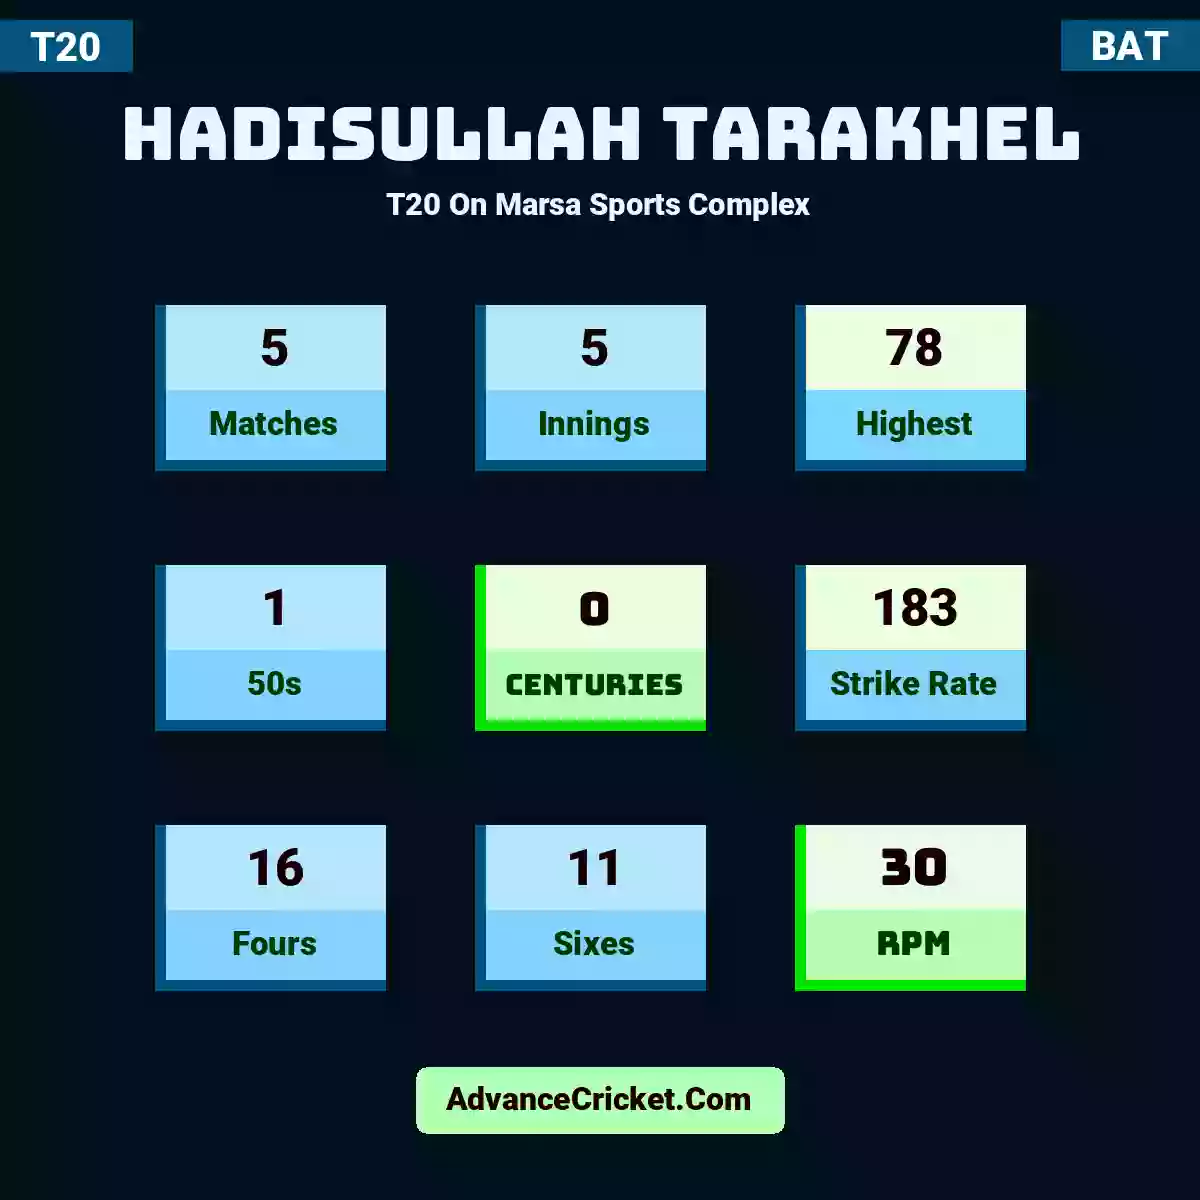 Hadisullah Tarakhel T20  On Marsa Sports Complex, Hadisullah Tarakhel played 5 matches, scored 78 runs as highest, 1 half-centuries, and 0 centuries, with a strike rate of 183. H.Tarakhel hit 16 fours and 11 sixes, with an RPM of 30.